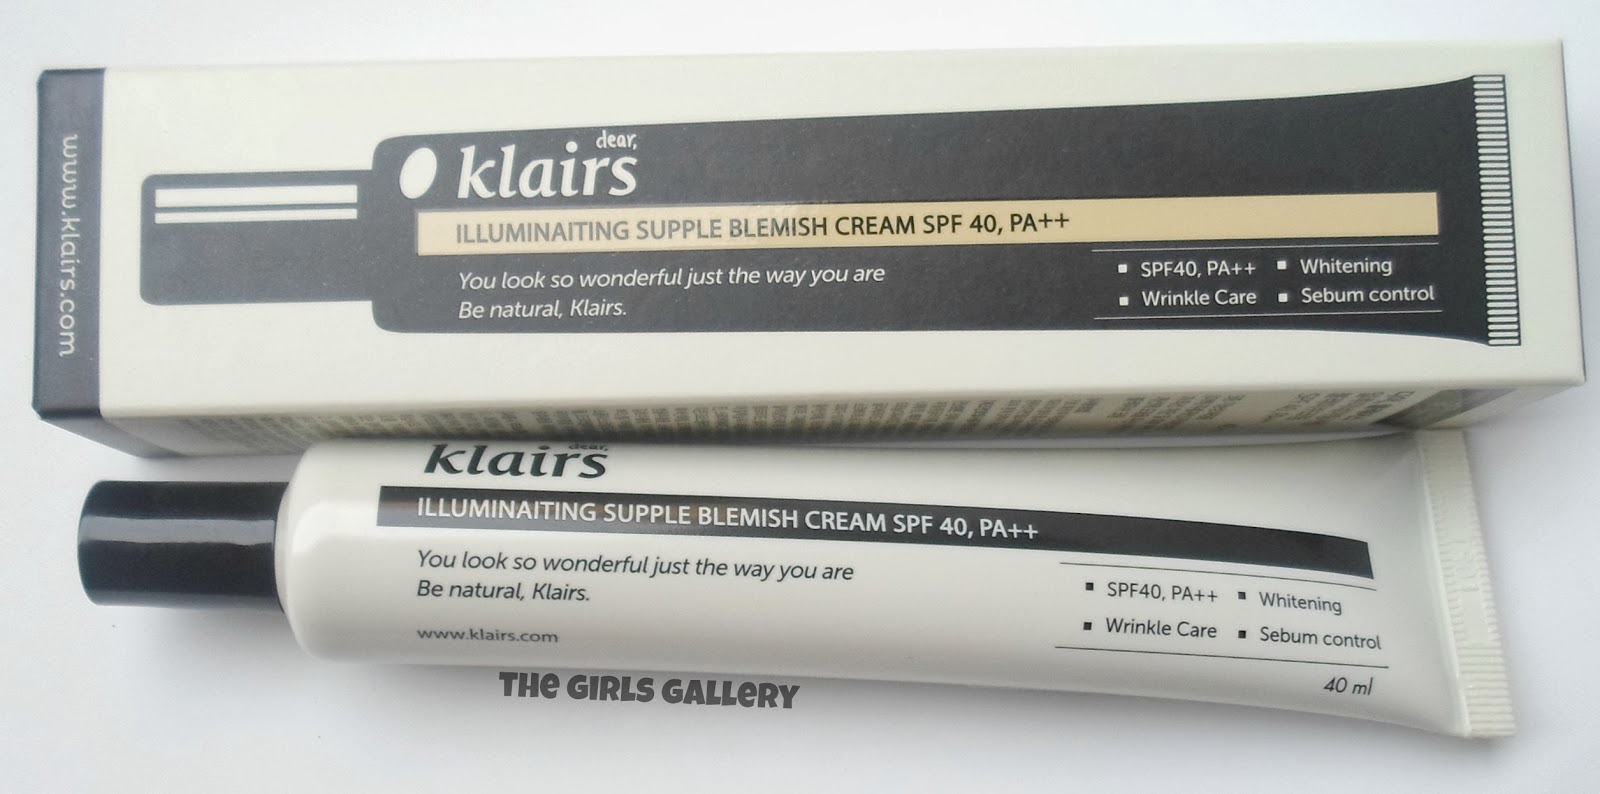 klairs illuminating supple blemish cream spf40 pa++ review